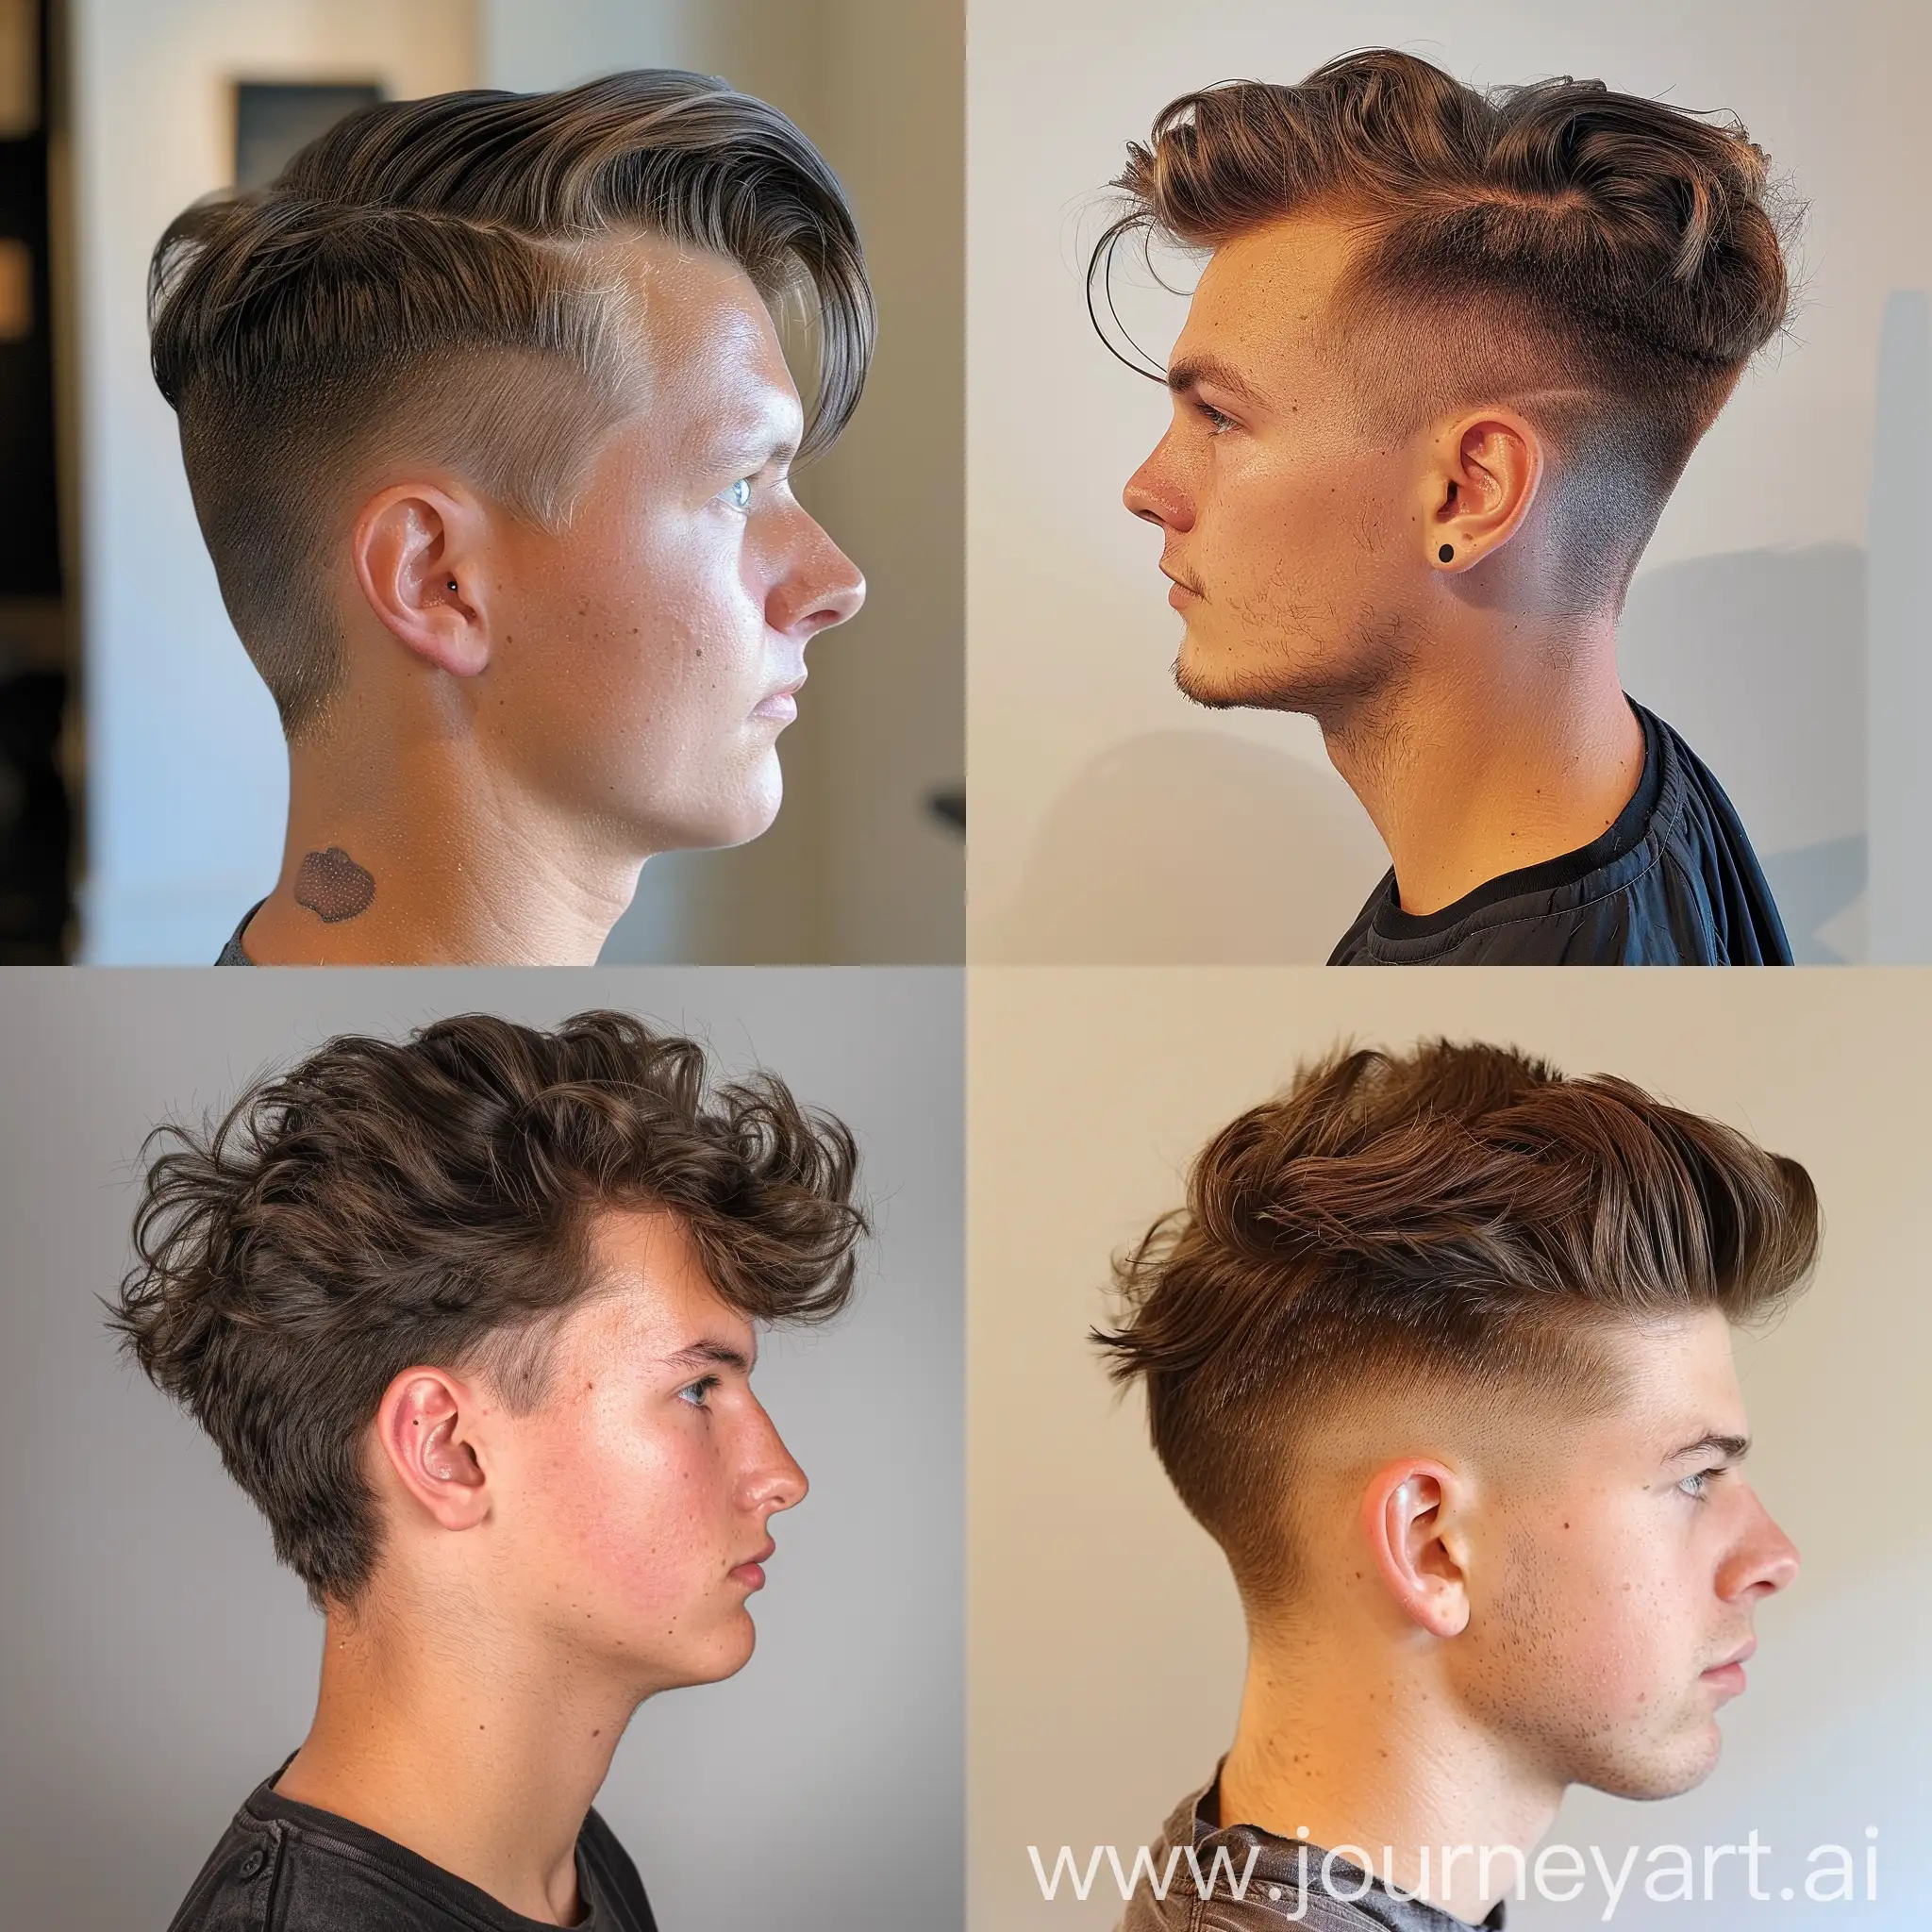 Realistic-MidTaper-Mullet-Haircut-Side-View-Portrait